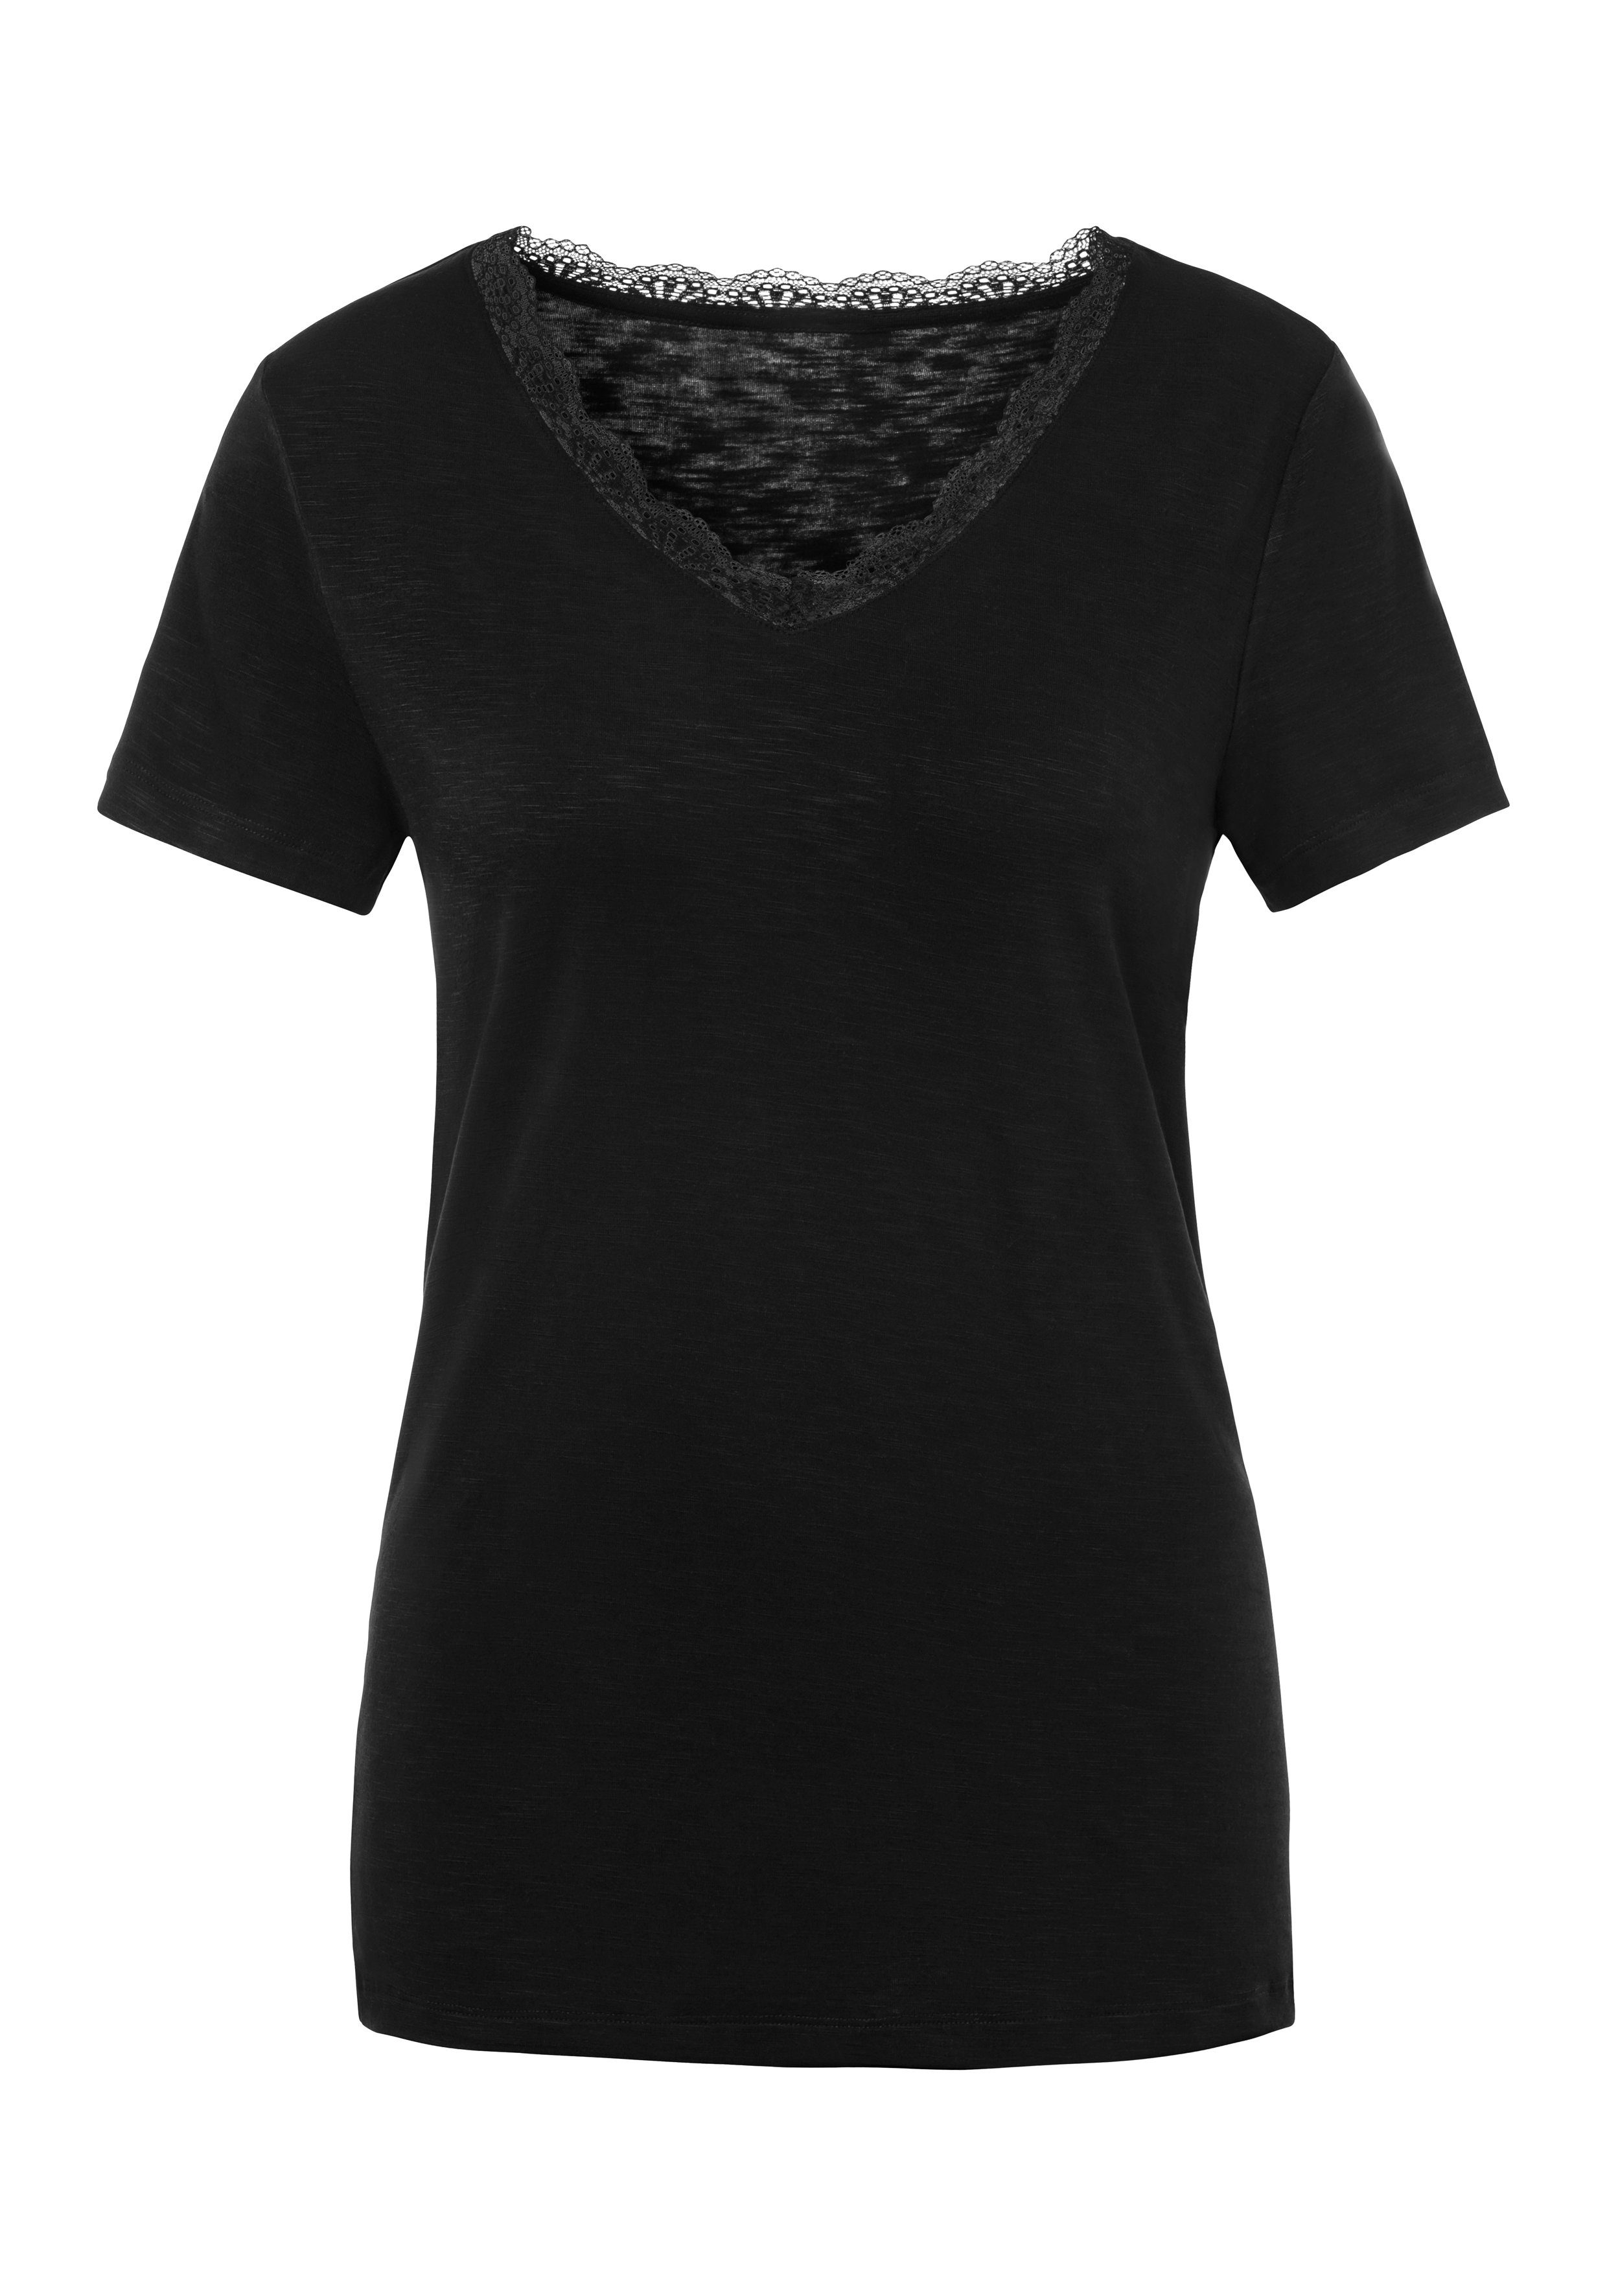 LASCANA T-Shirt Spitze mit schwarz, am (Packung, zarter beige Ausschnitt 2-tlg)